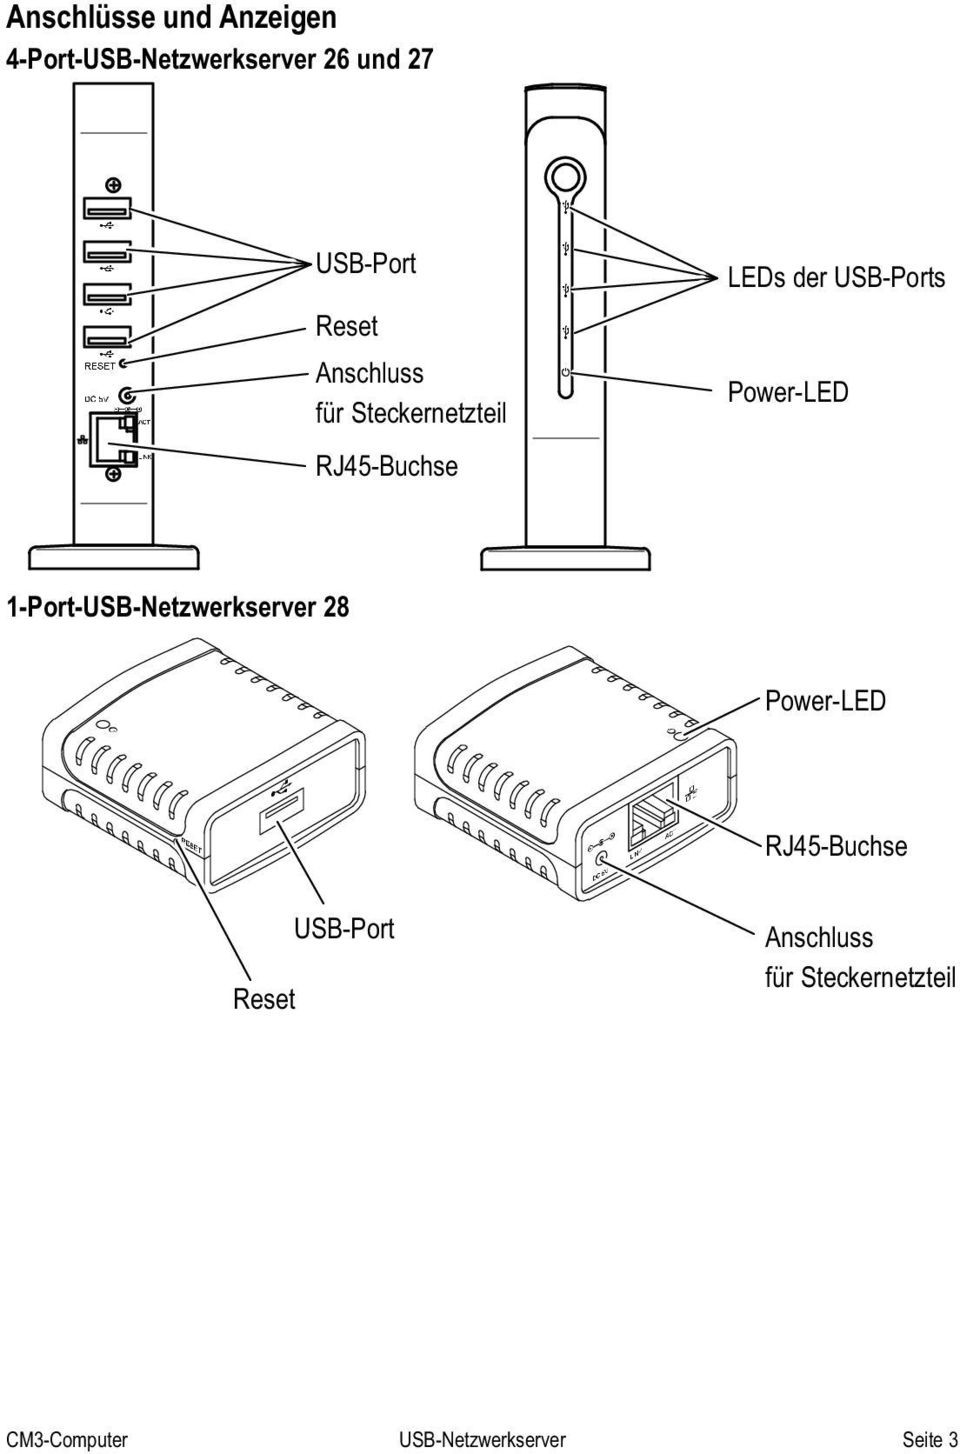 Ports Power LED 1 Port 28 Power LED RJ45 Buchse Reset